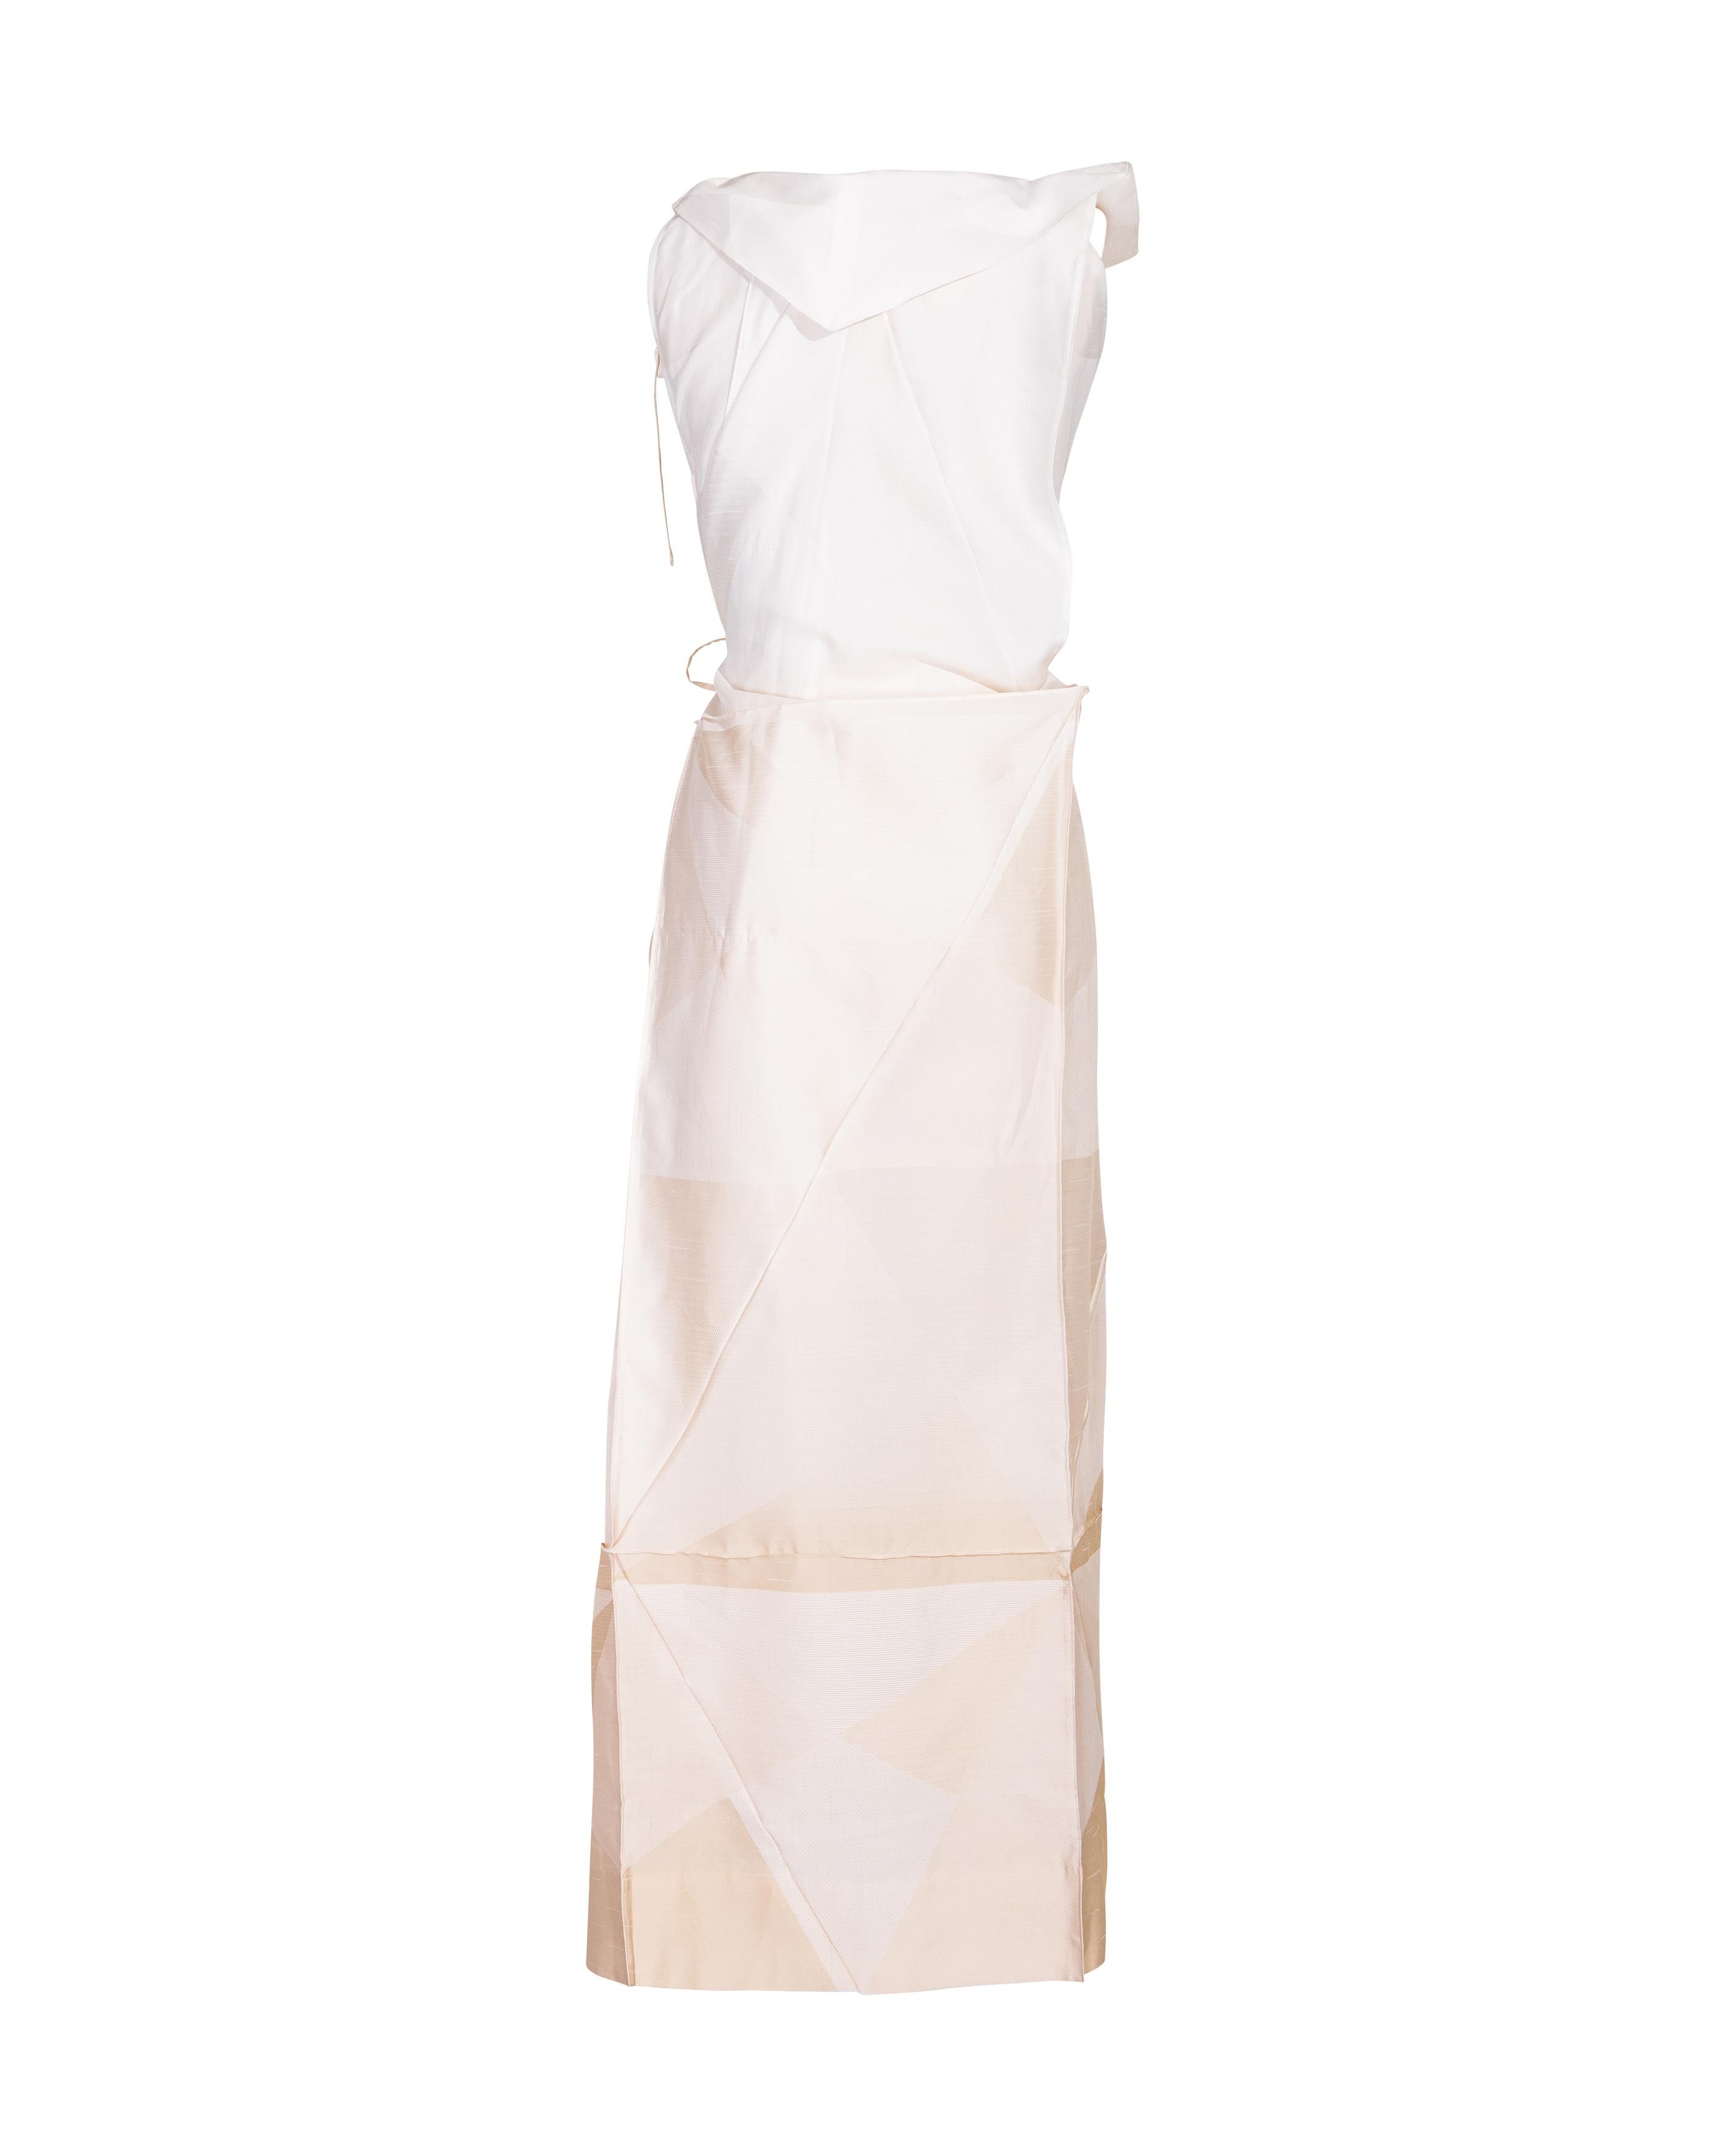 Women's A/W 2008 Issey Miyake White and Cream Geometric Sleeveless Gown